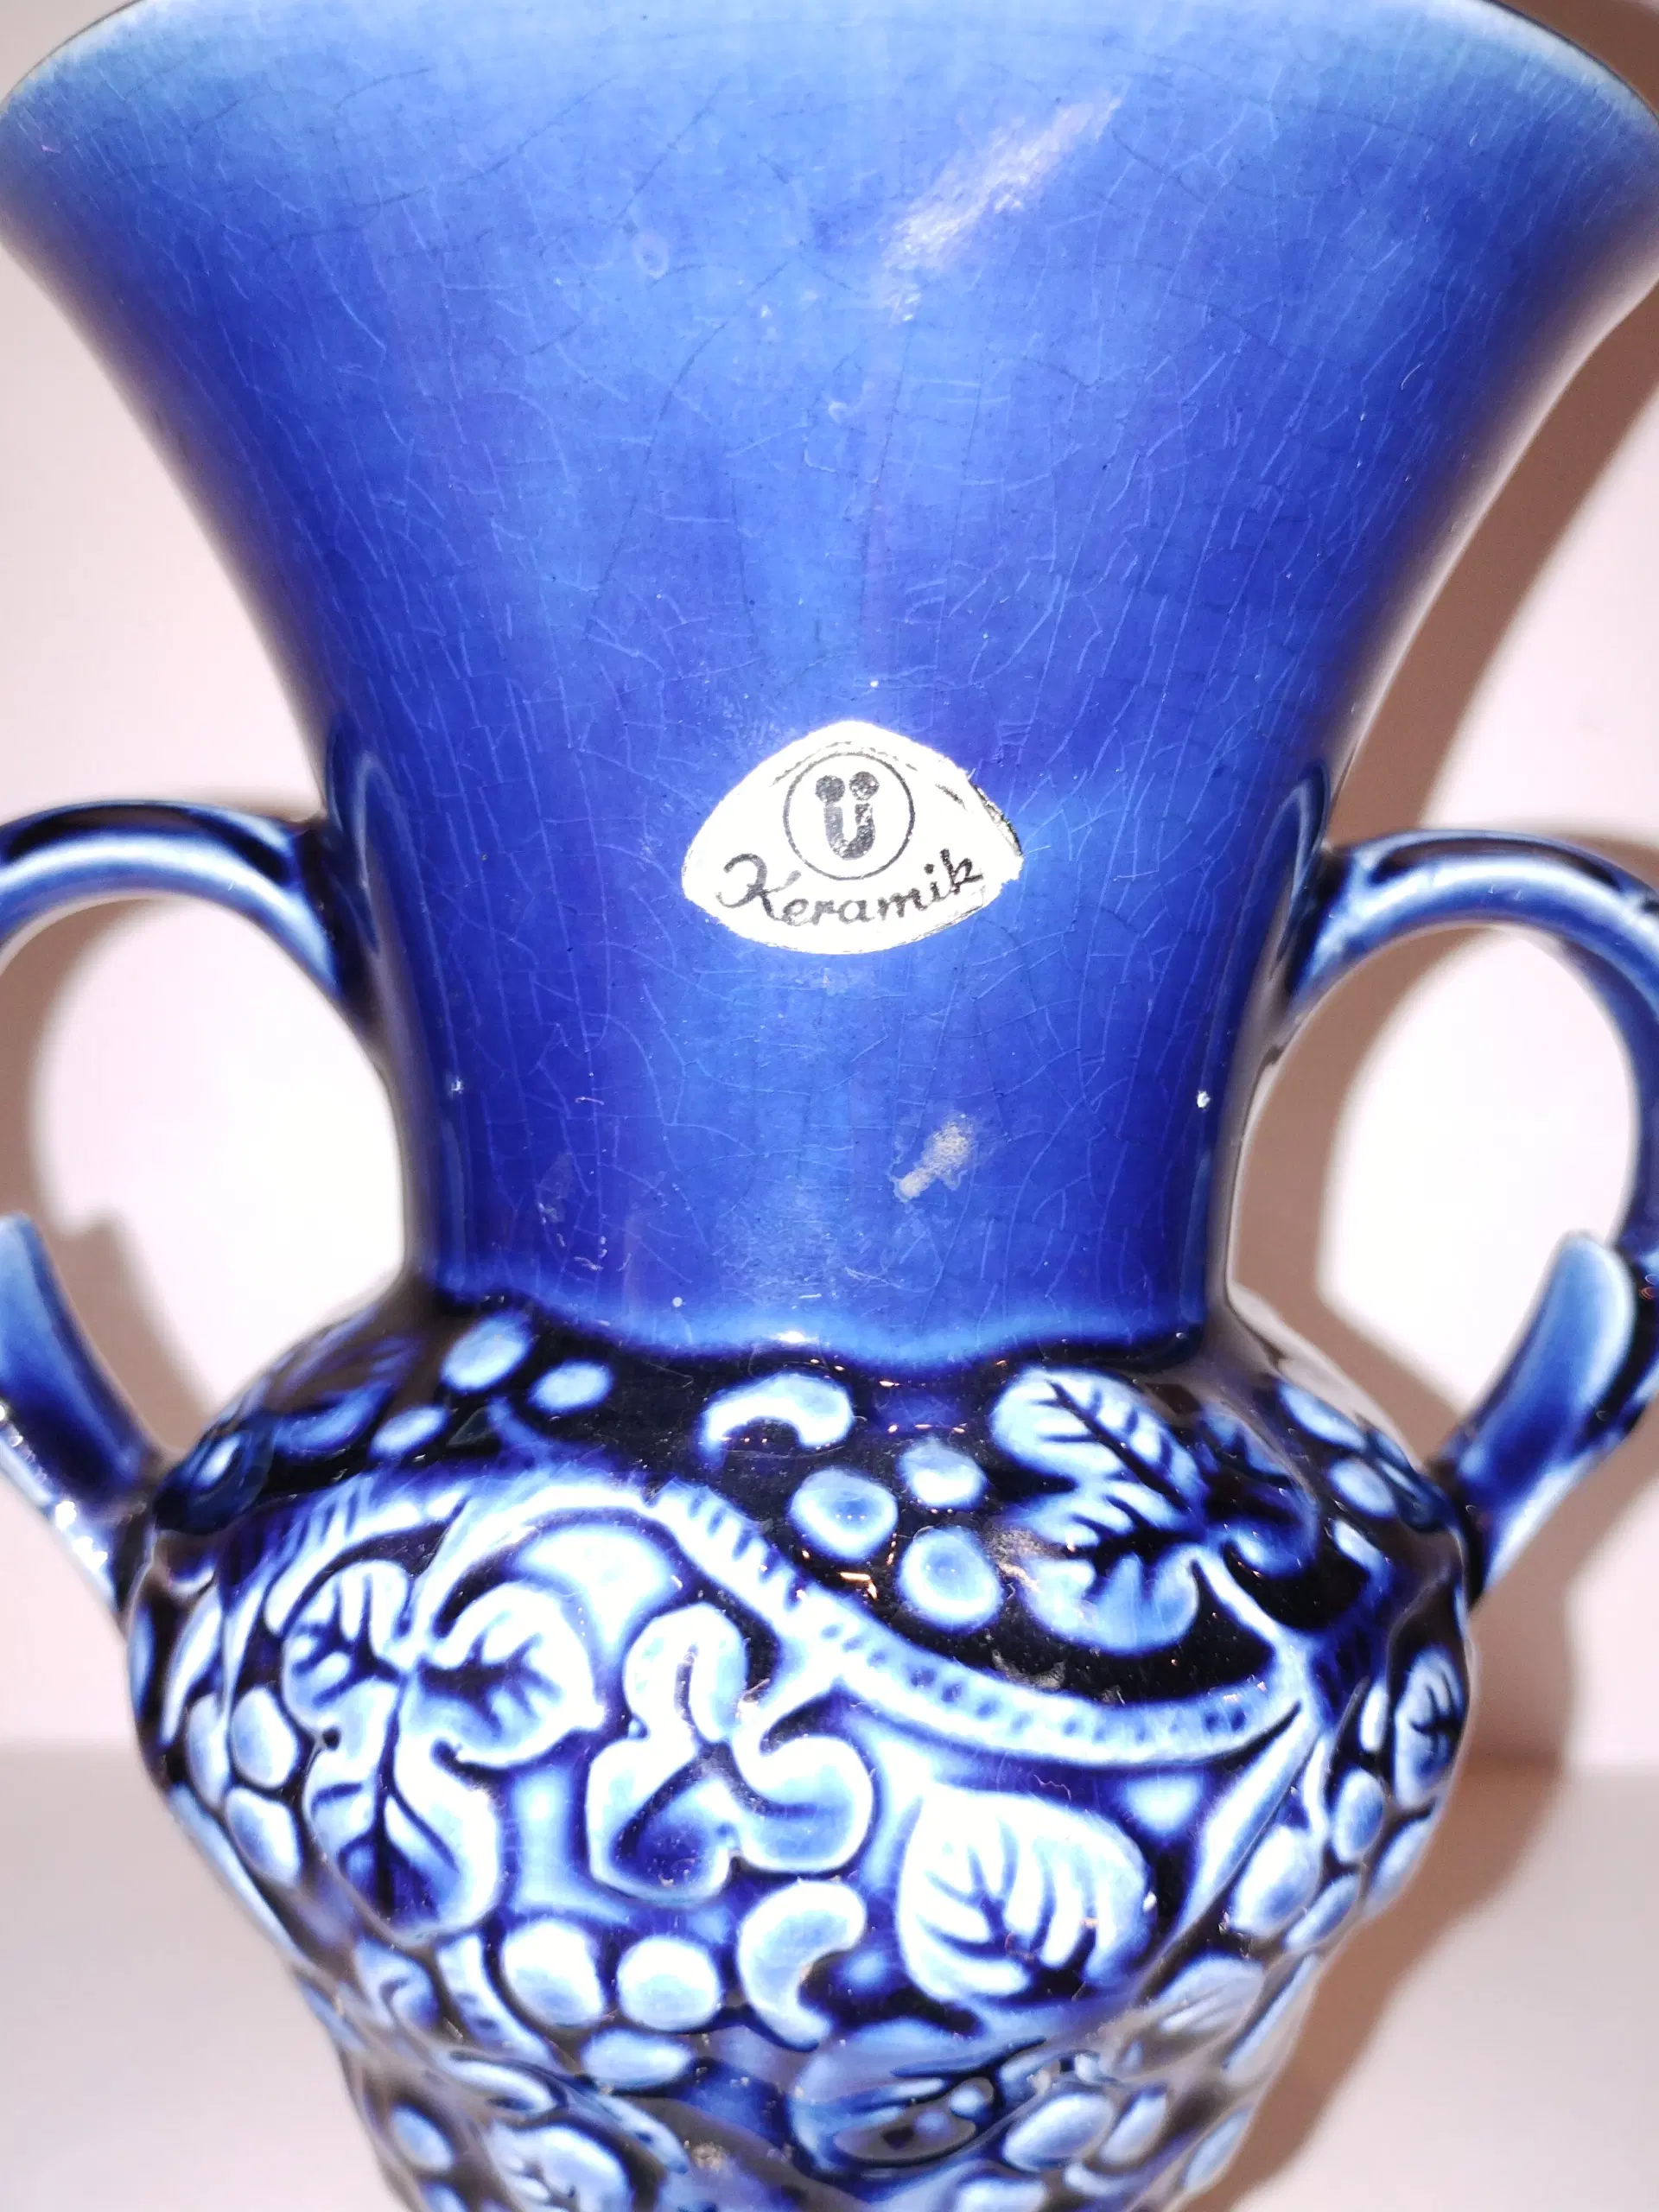 Übelacker Keramik vase